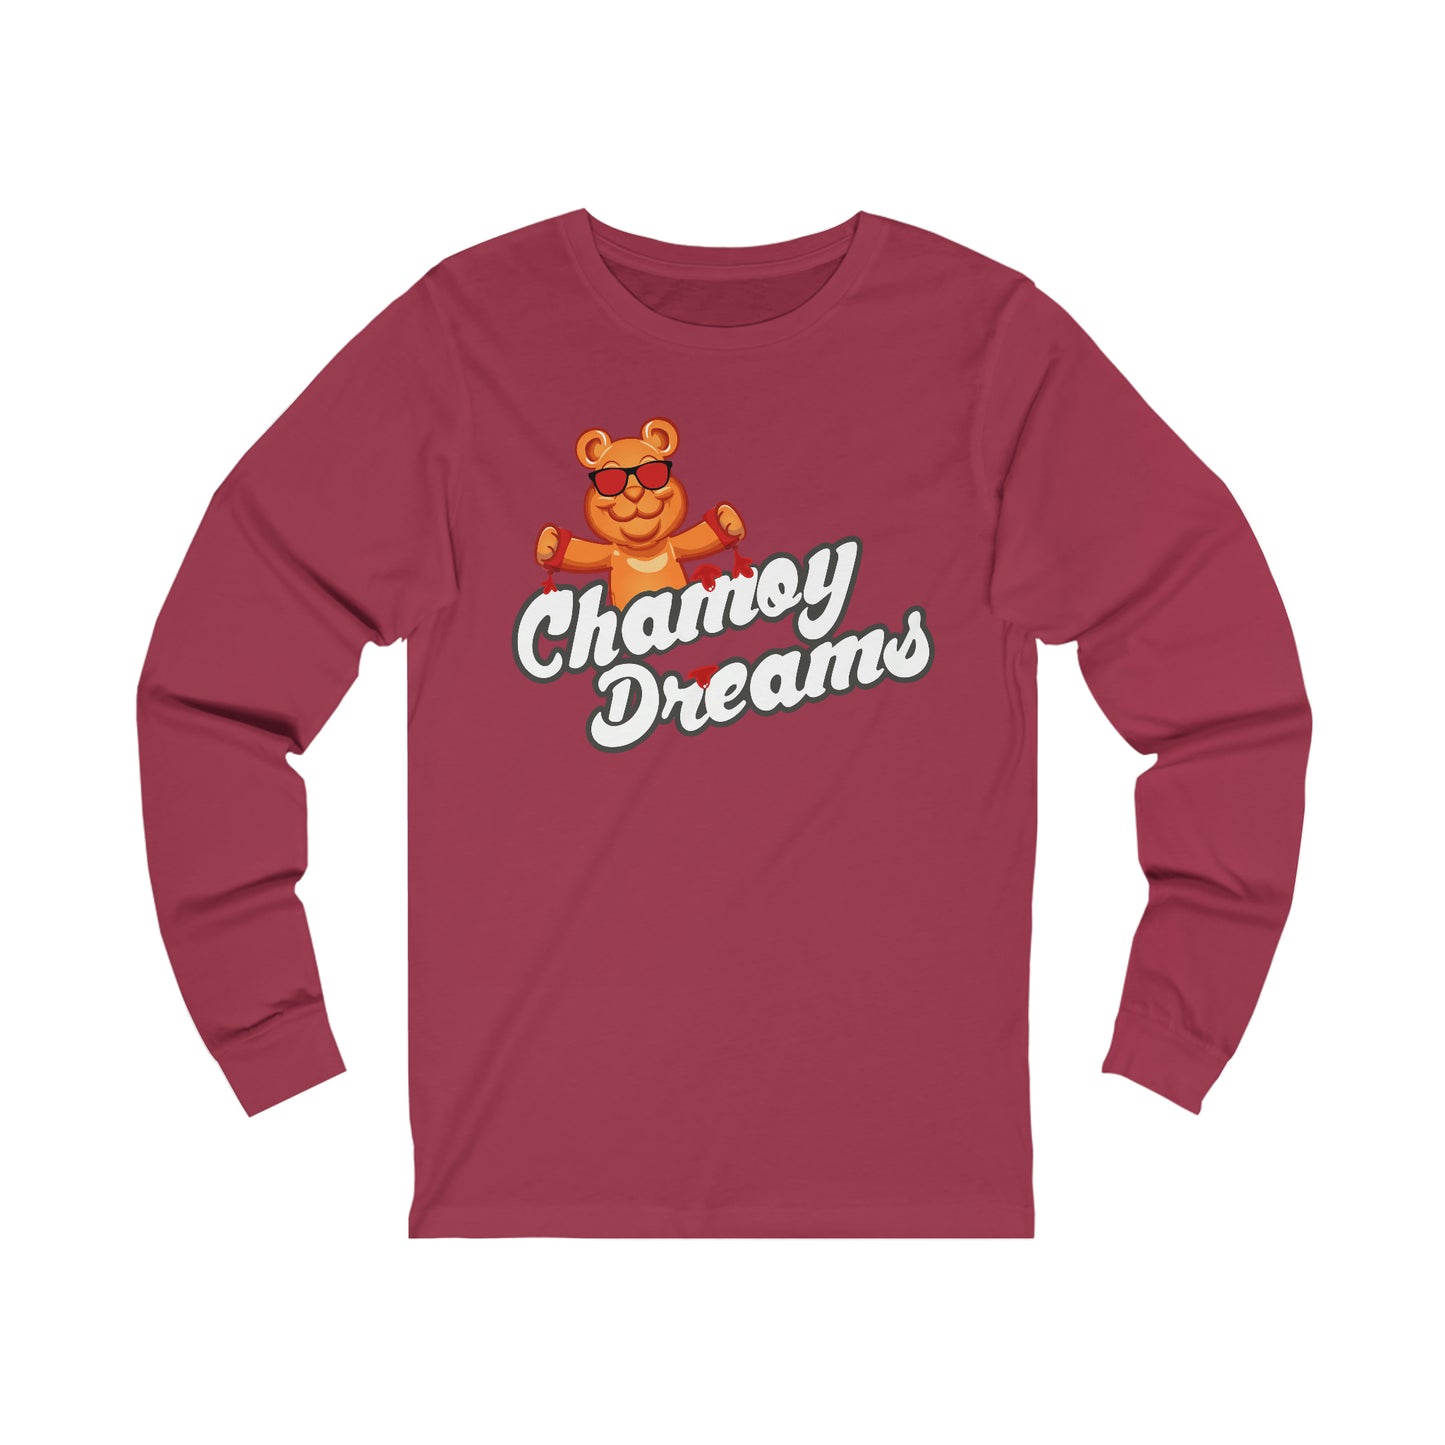 Unisex Jersey Long Sleeve Tee - New Chamoy Dreams